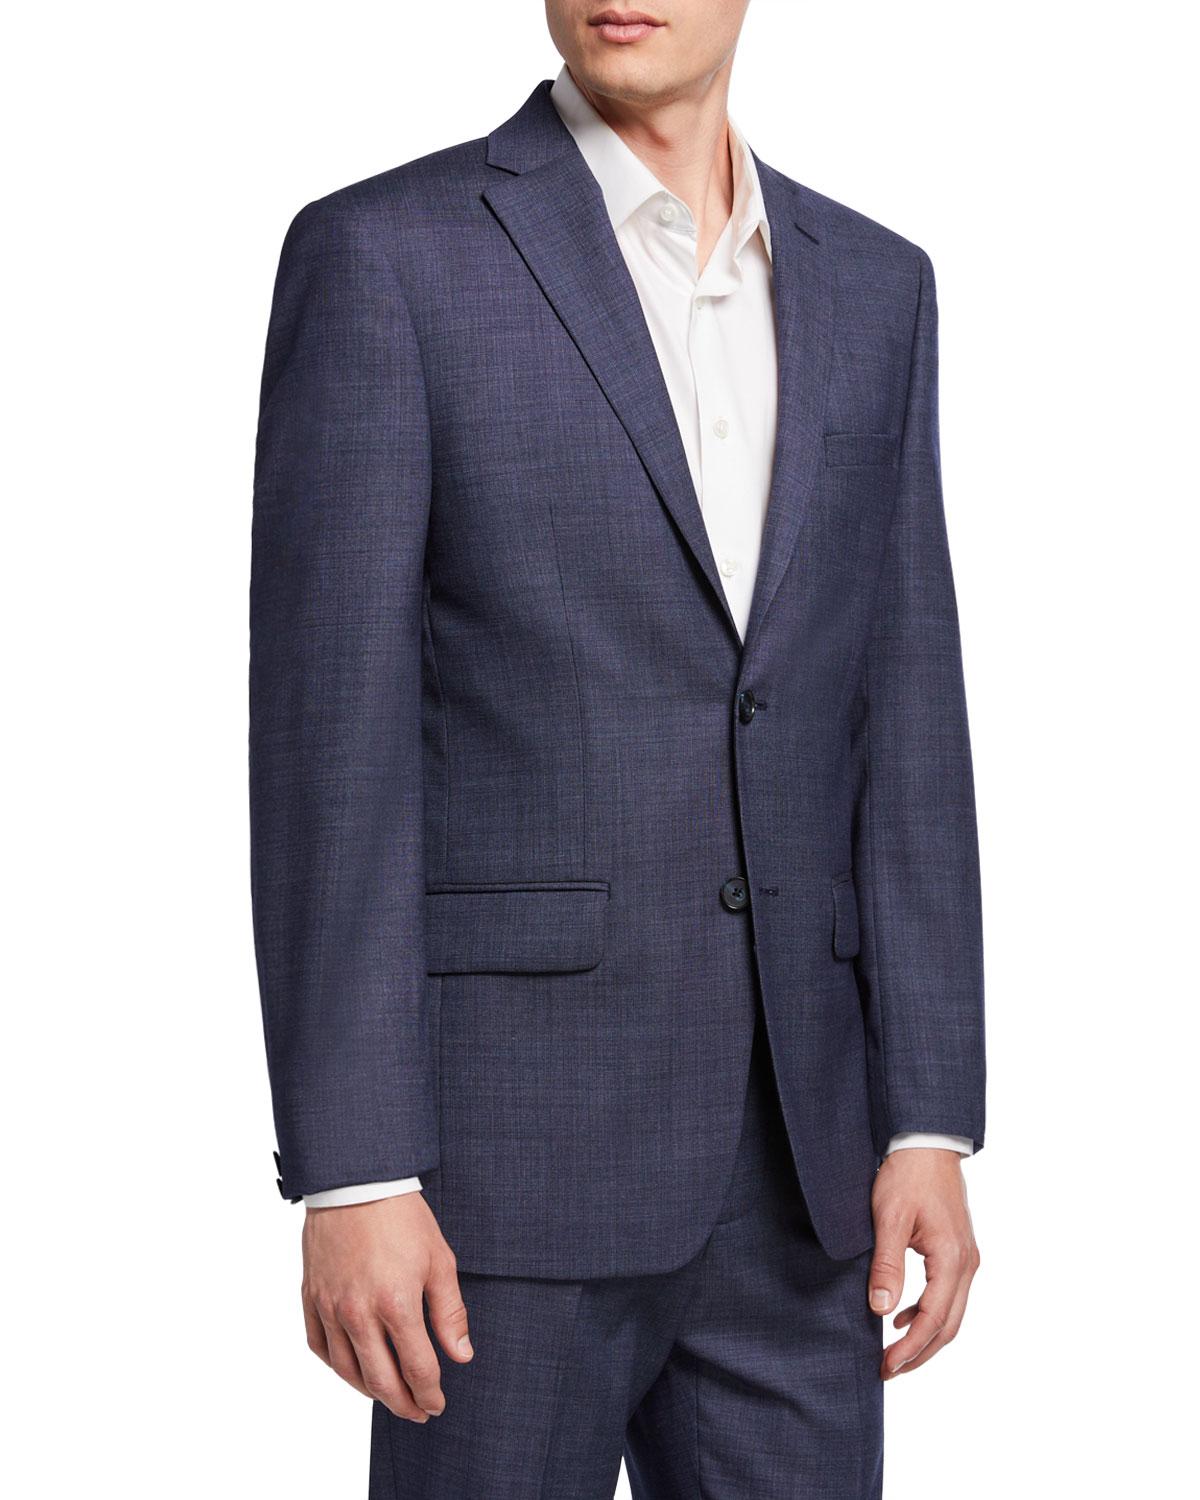 DKNY Slim-fit Wool Suit in Blue for Men - Lyst